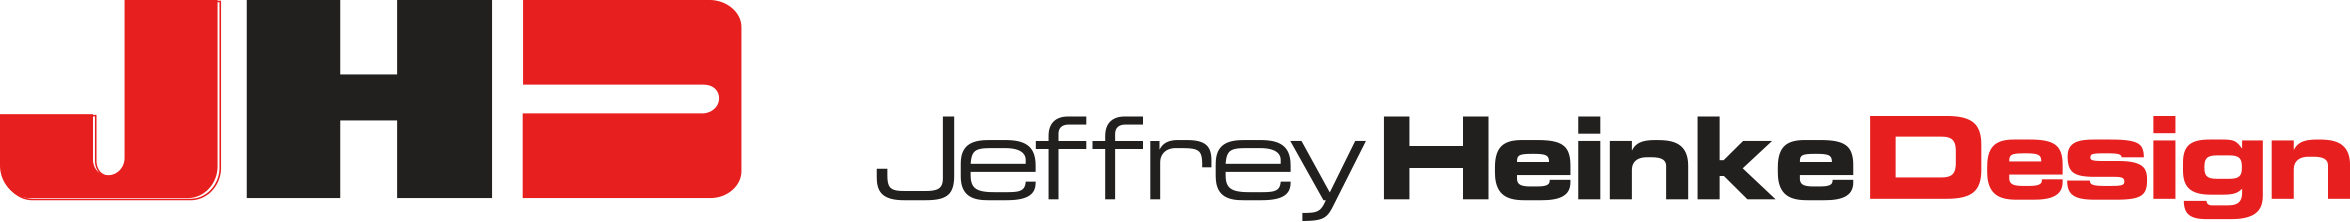 Jeffrey Heinke Design Logo